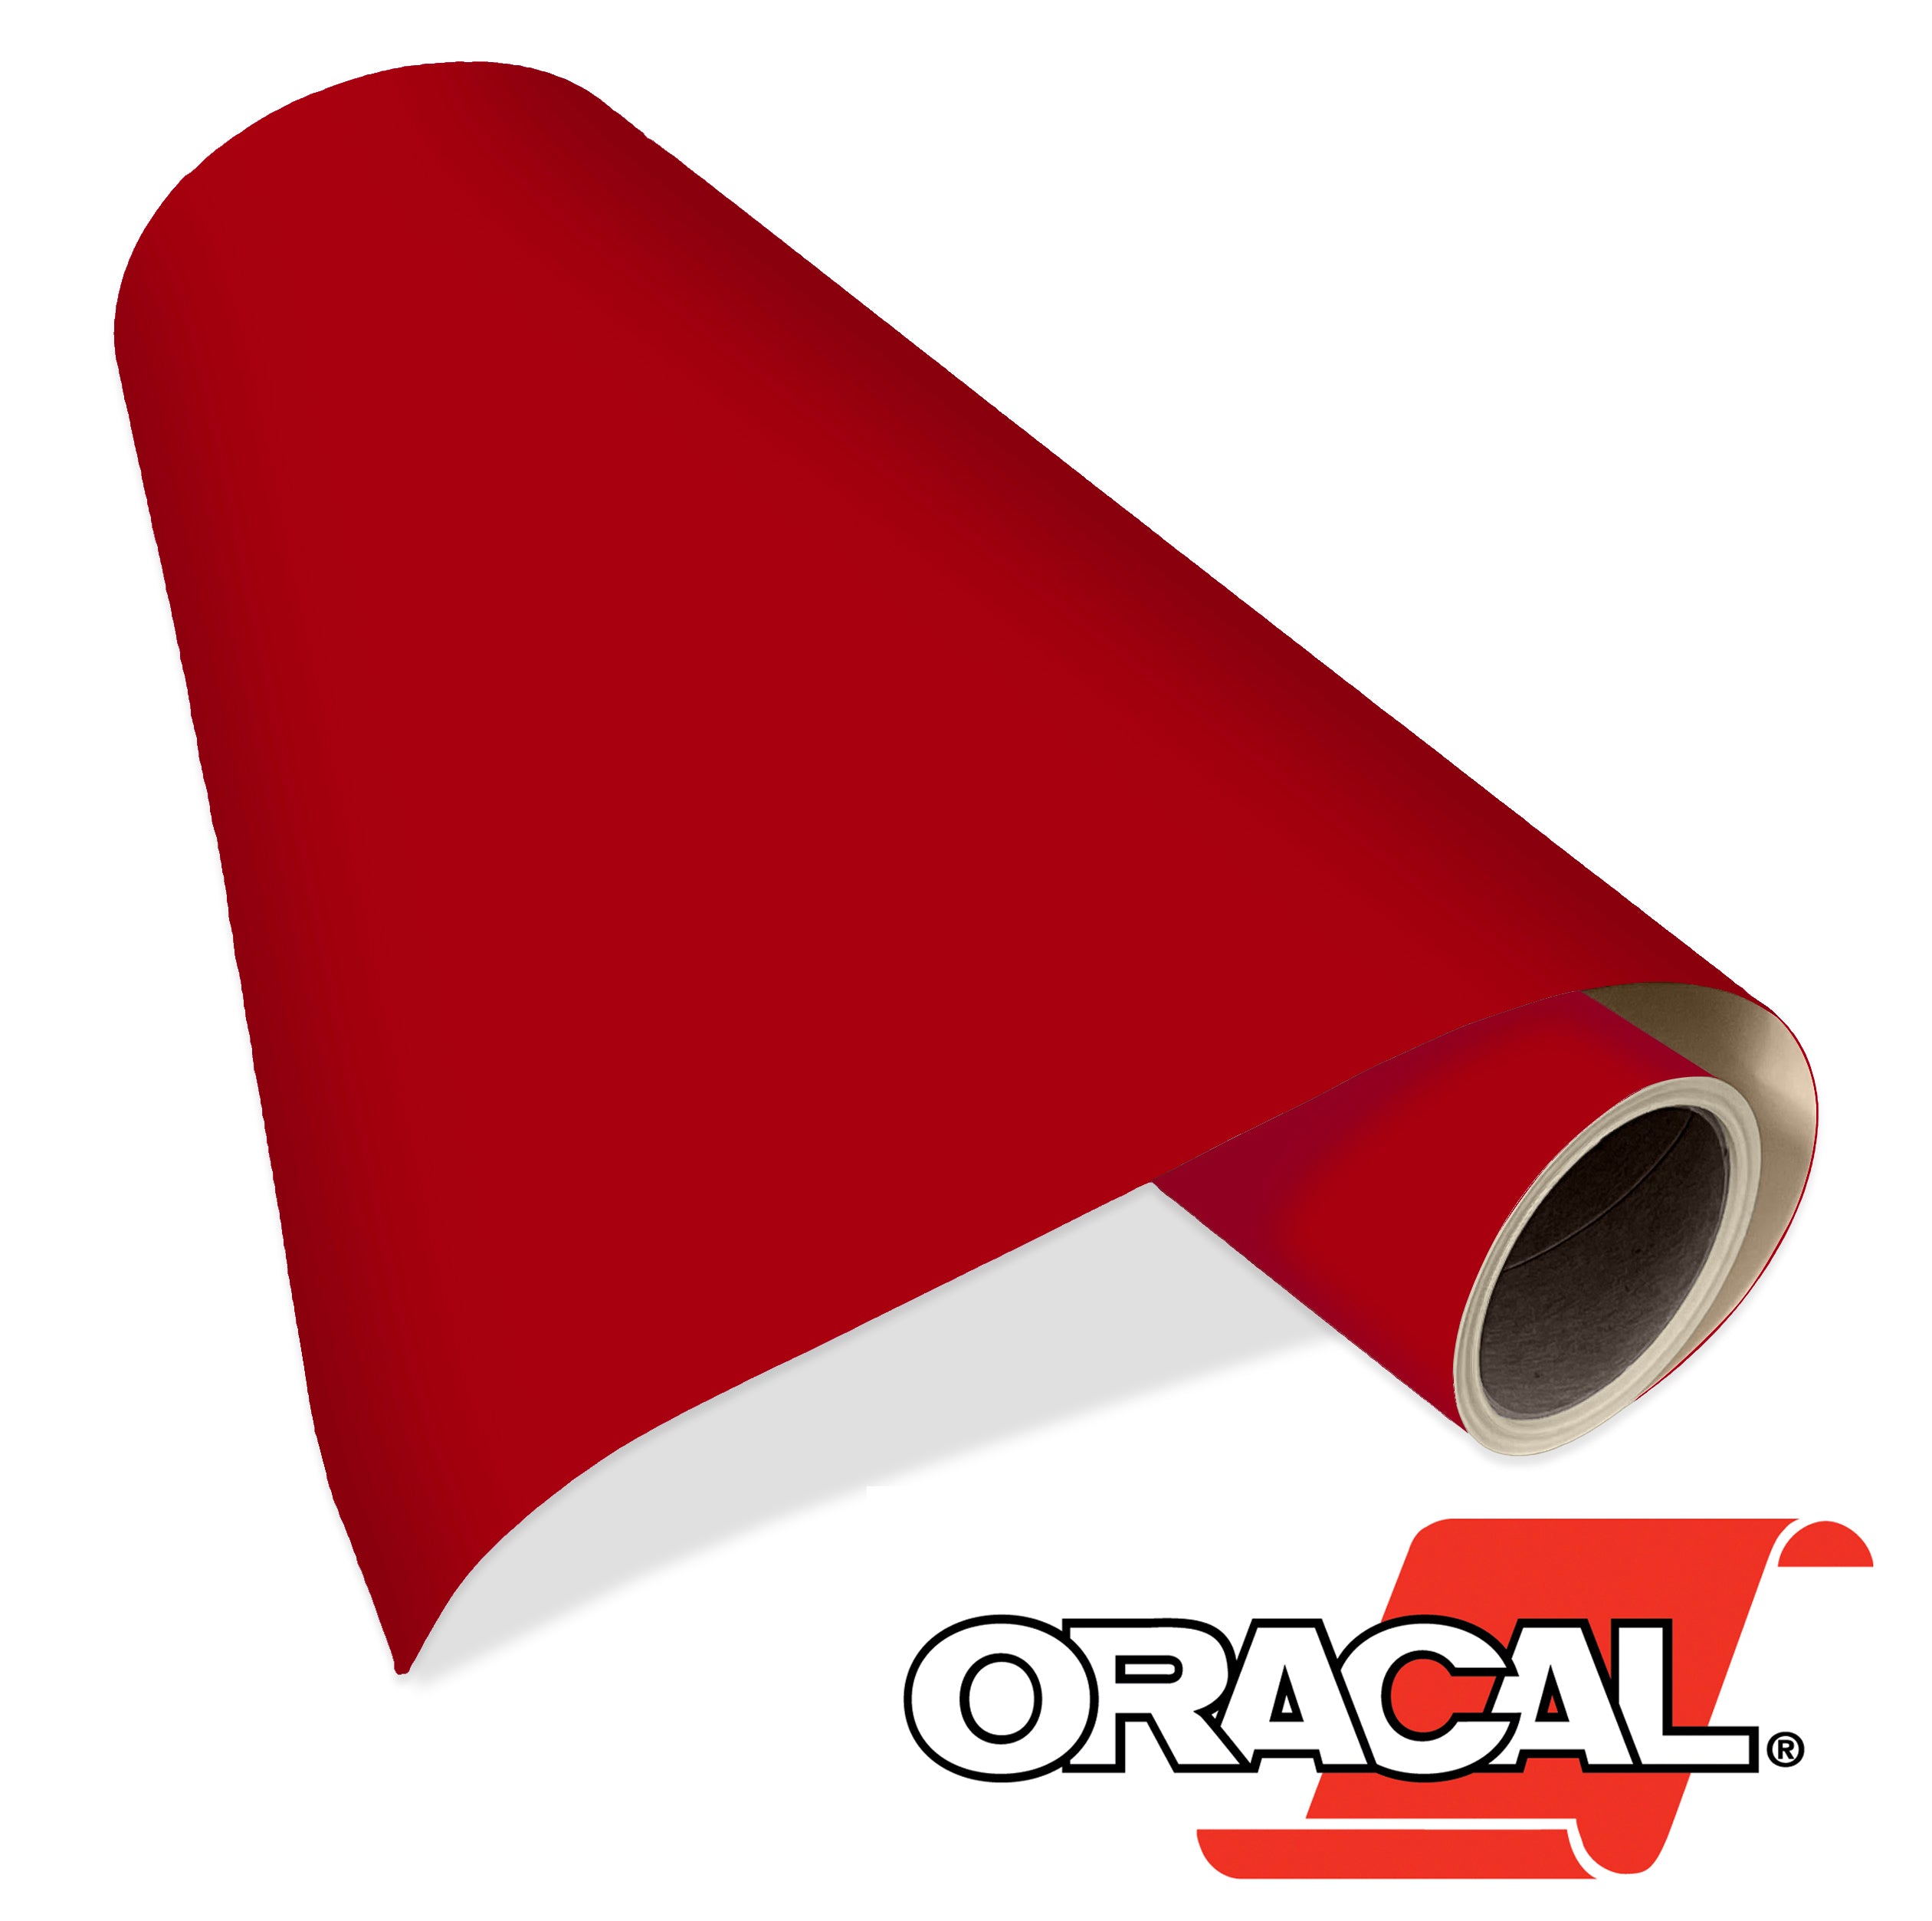 Oracal Adhesive Vinyl - Red Coral Oracal 951 Cast Vinyl Salmon Outdoor